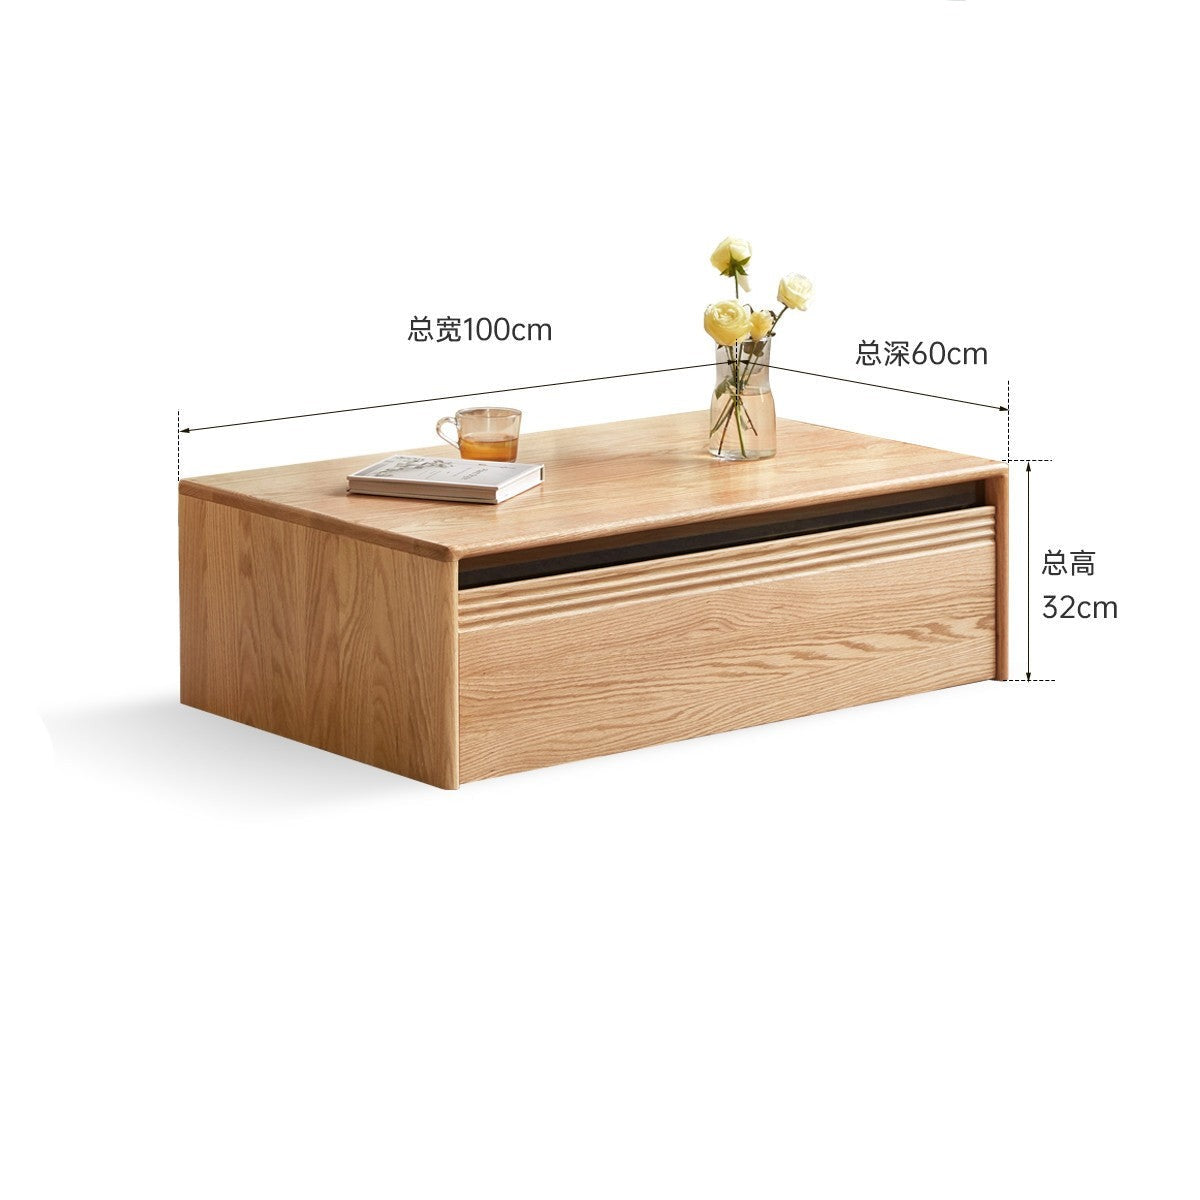 Oak solid wood coffee table modern storage)